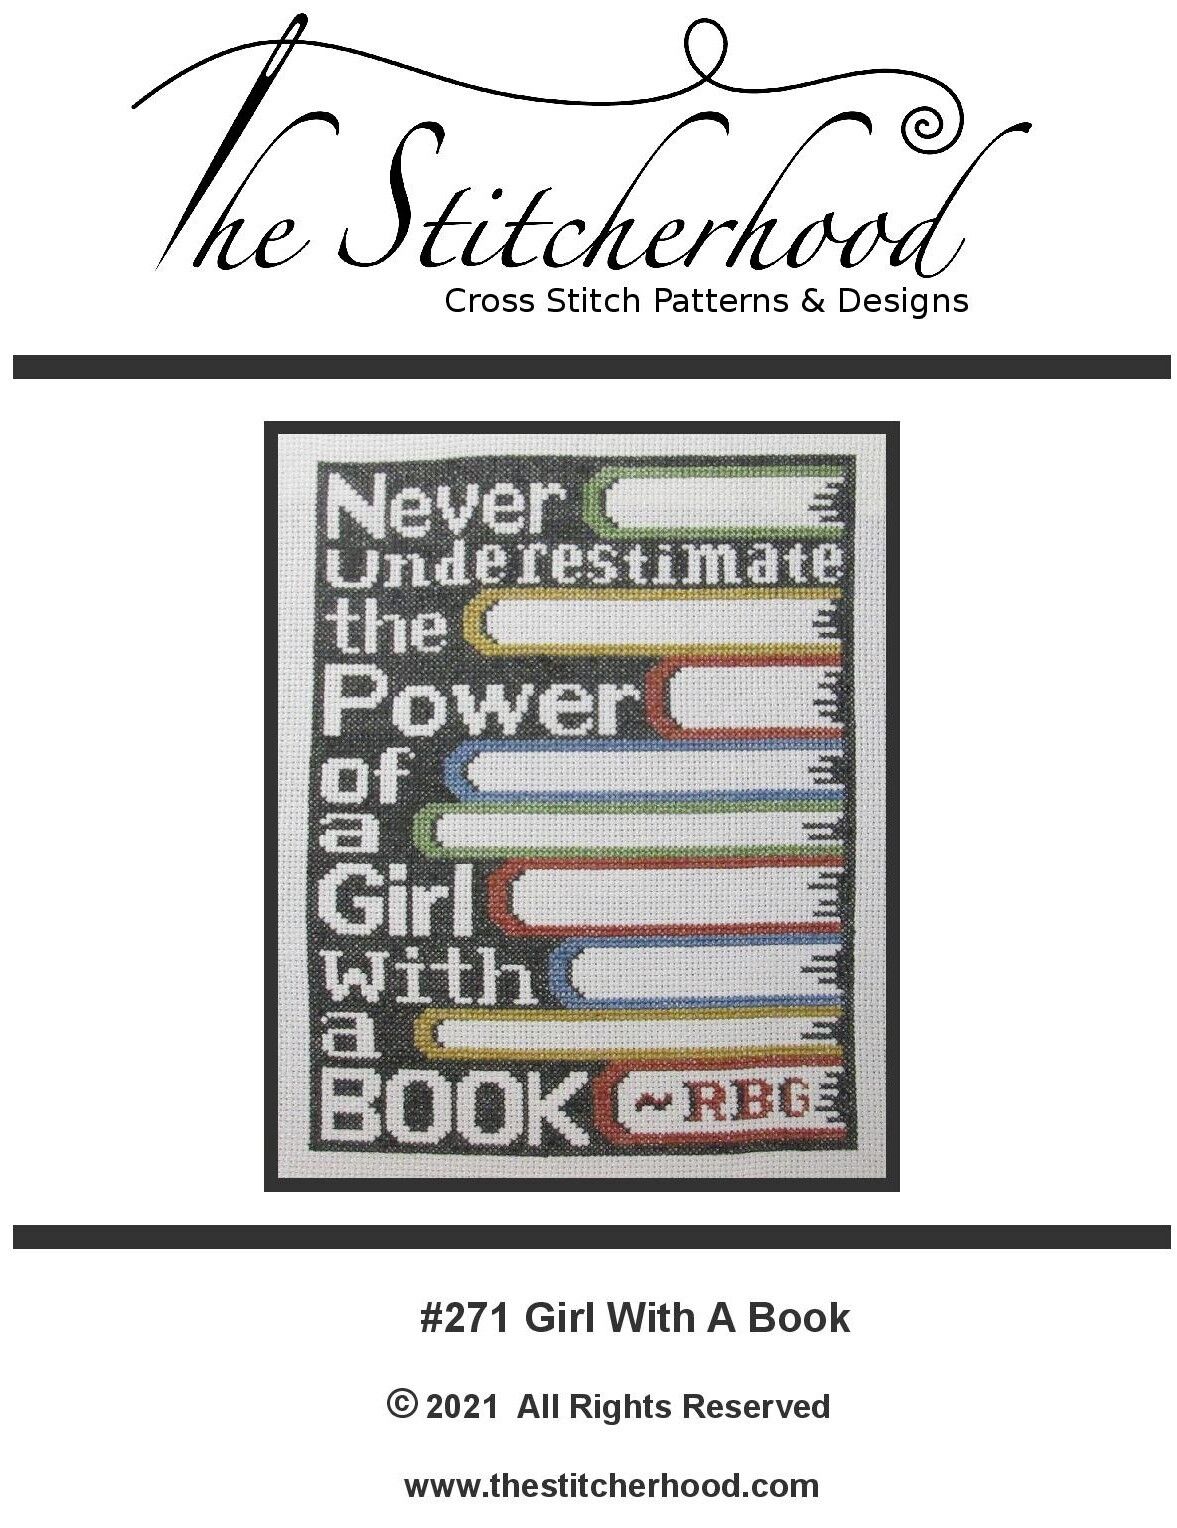 RBG quote girl power read books cross stitch